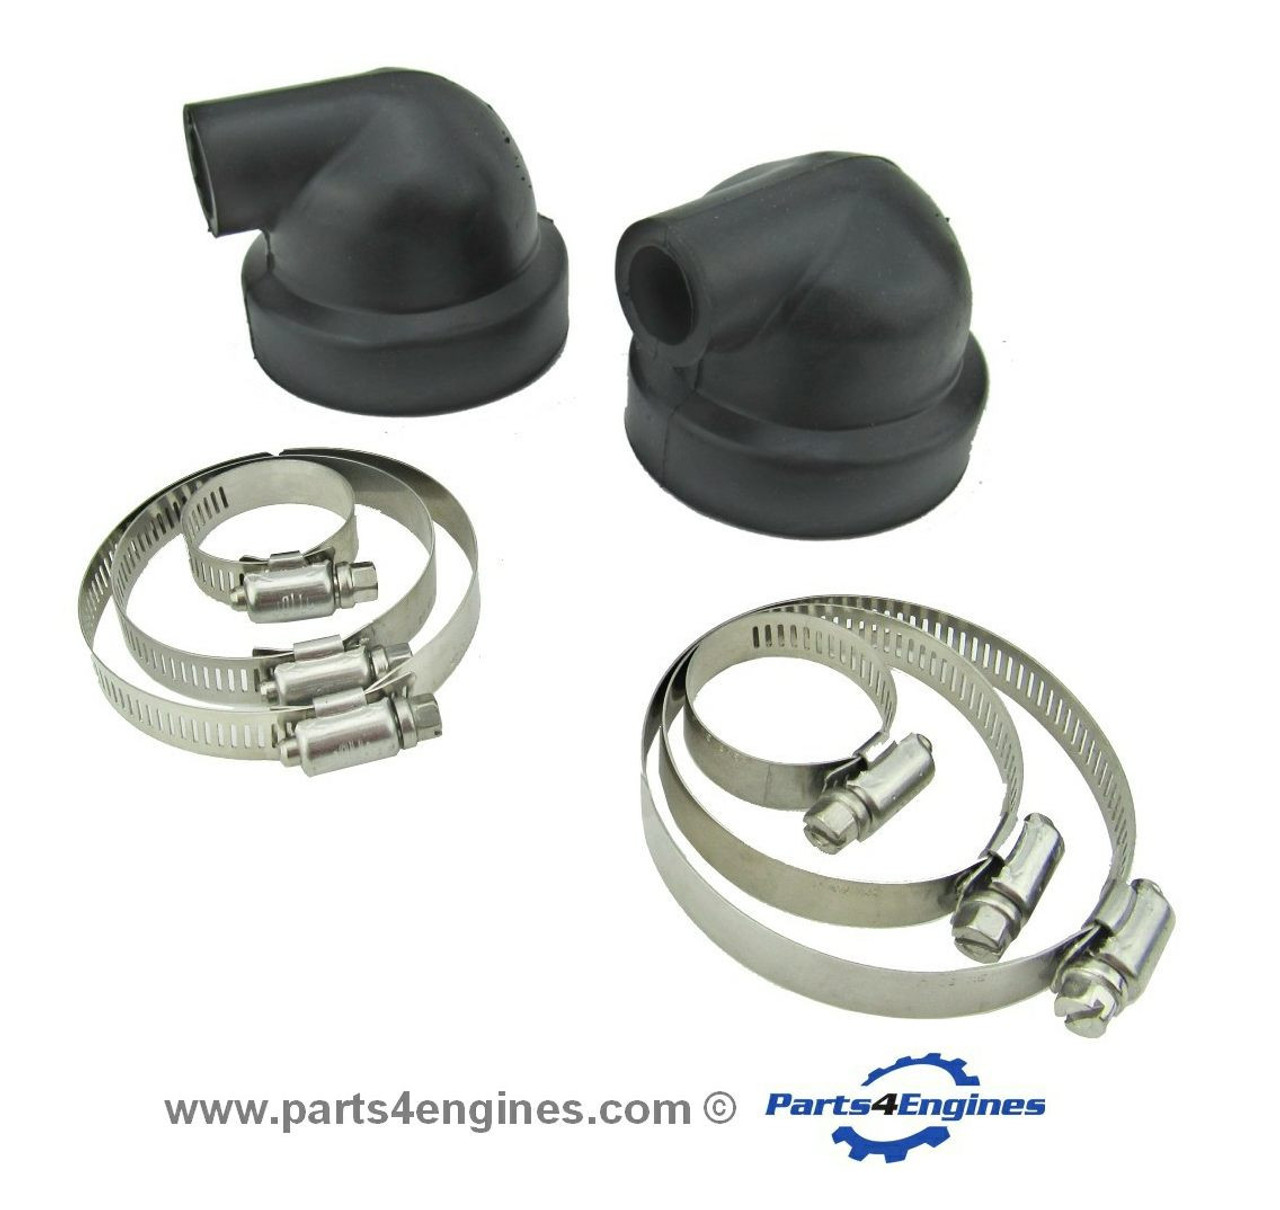 Perkins Perama M30 Heat exchanger end cover caps